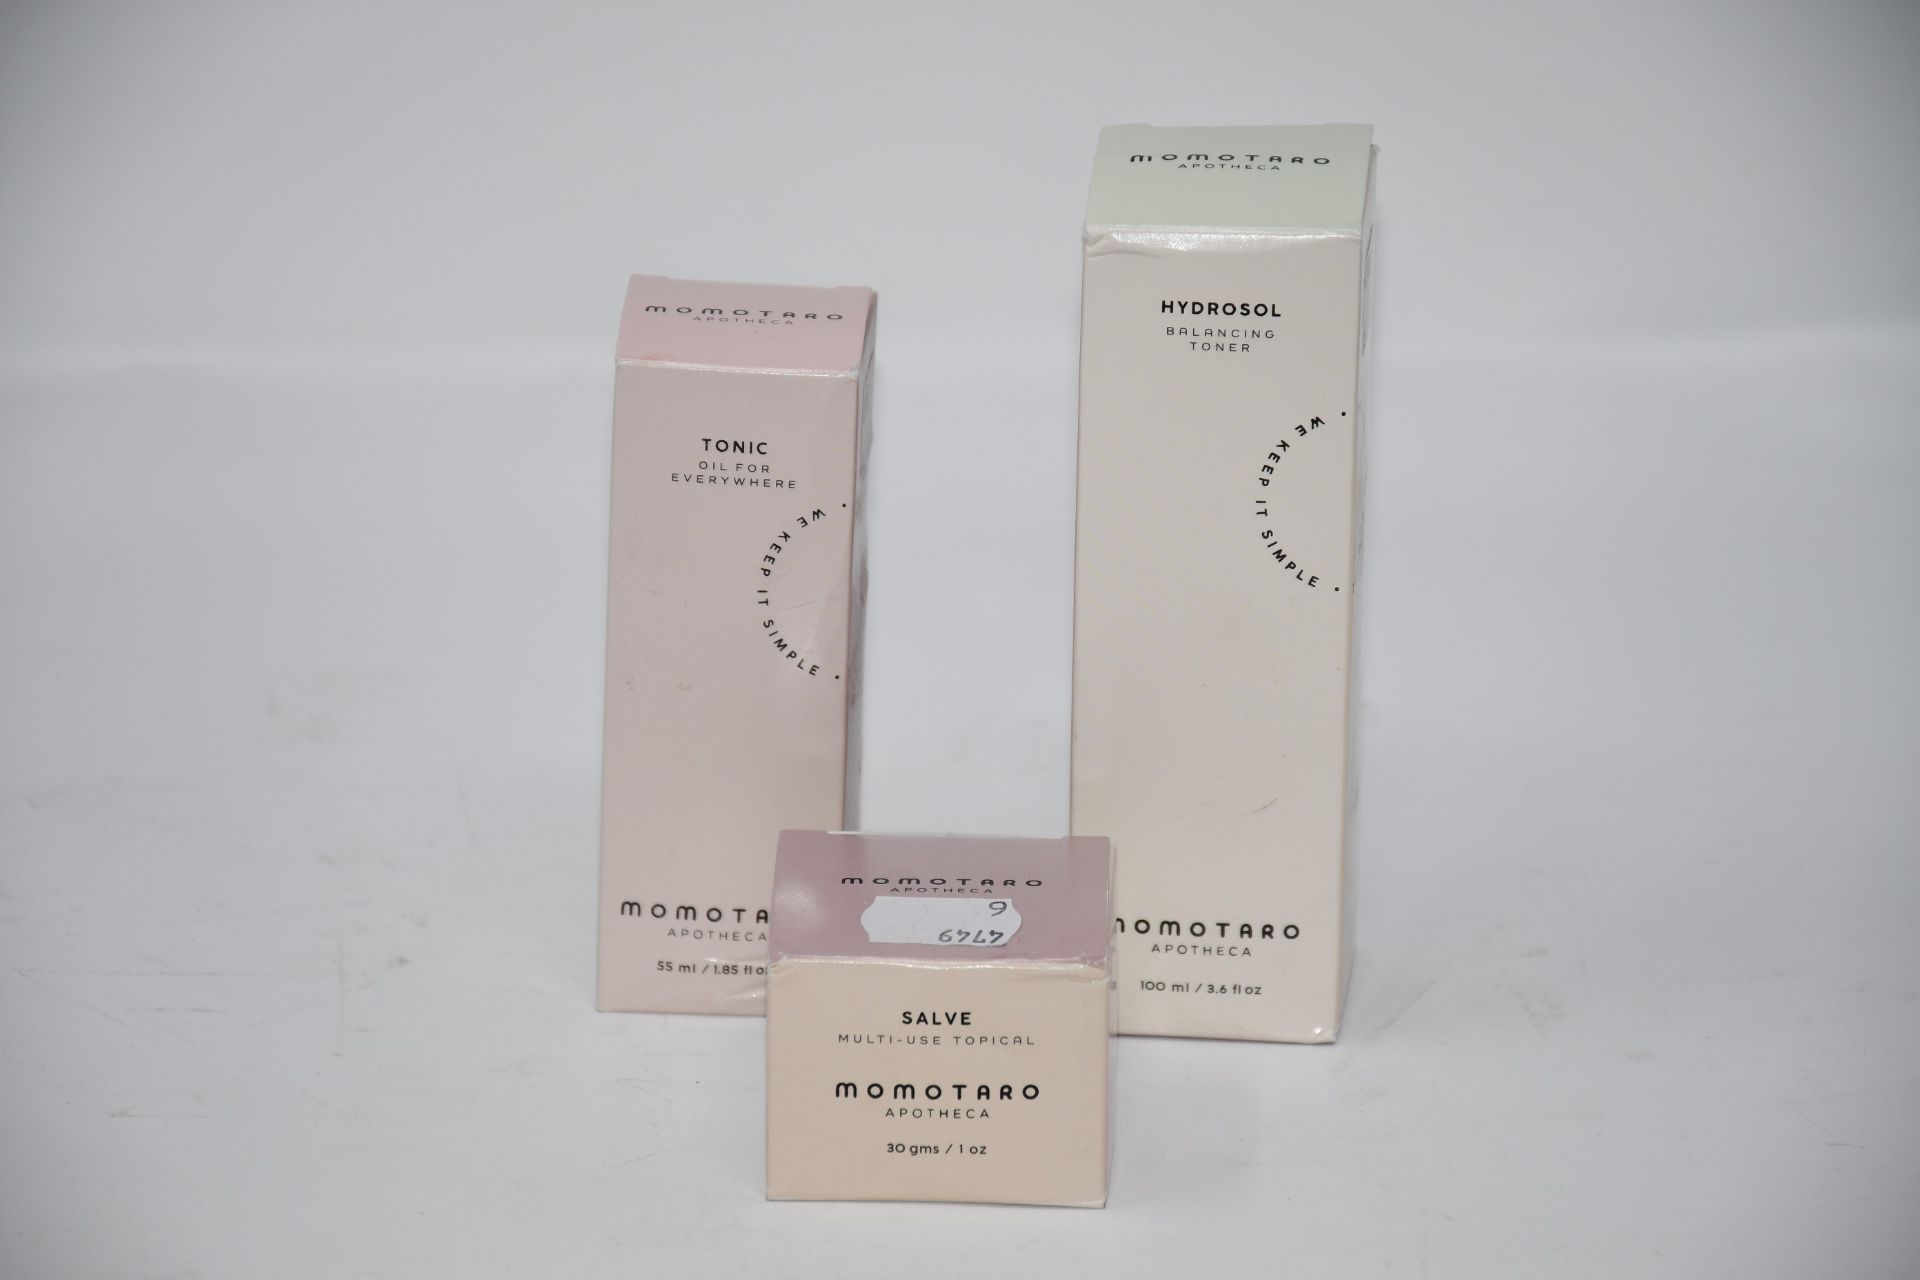 Three boxed Momotoaro Apotheca beauty products to include one Momotaro balancing toner (55ml), one